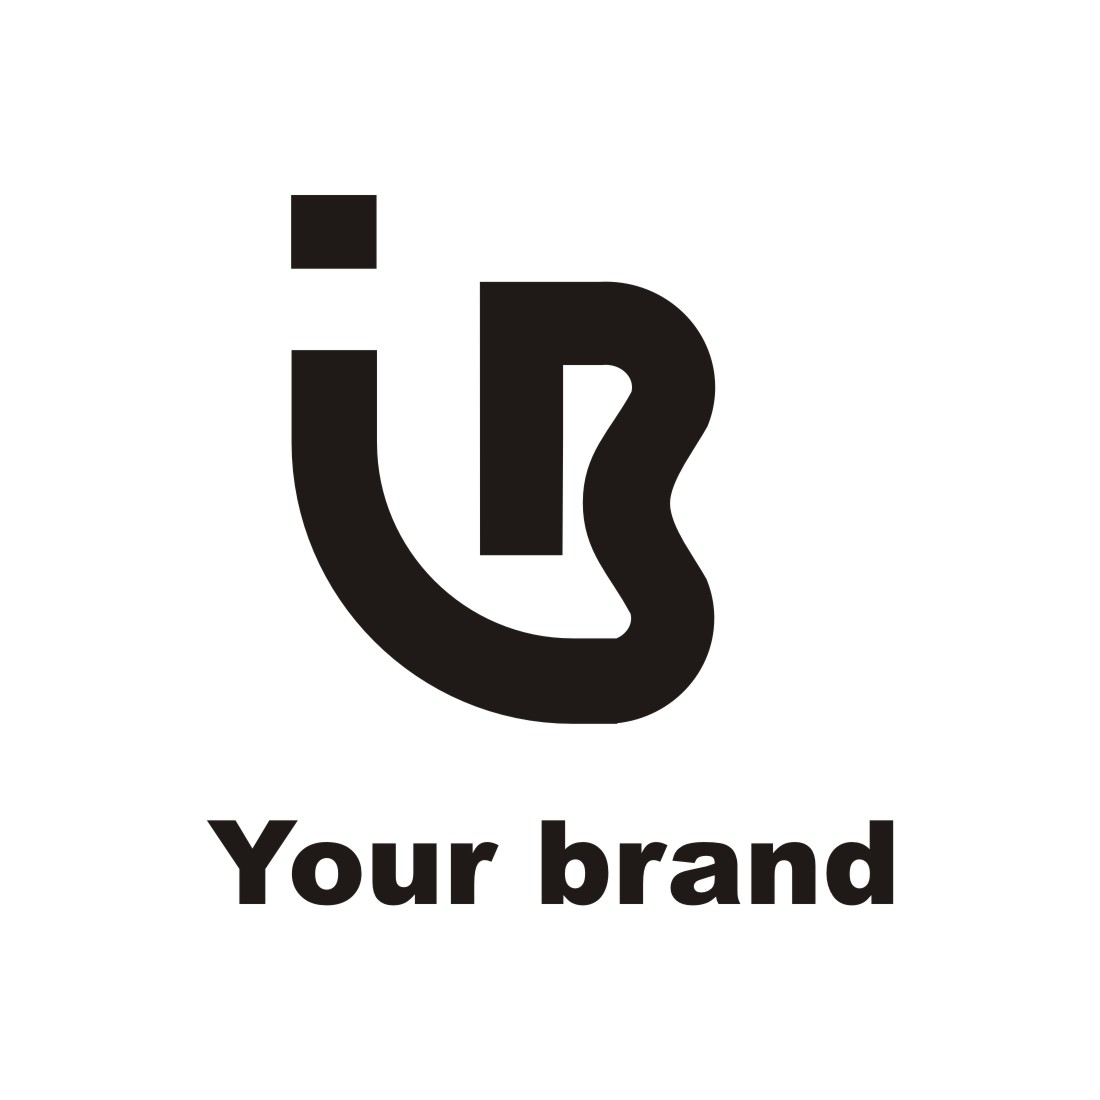 IB monogram logo preview image.